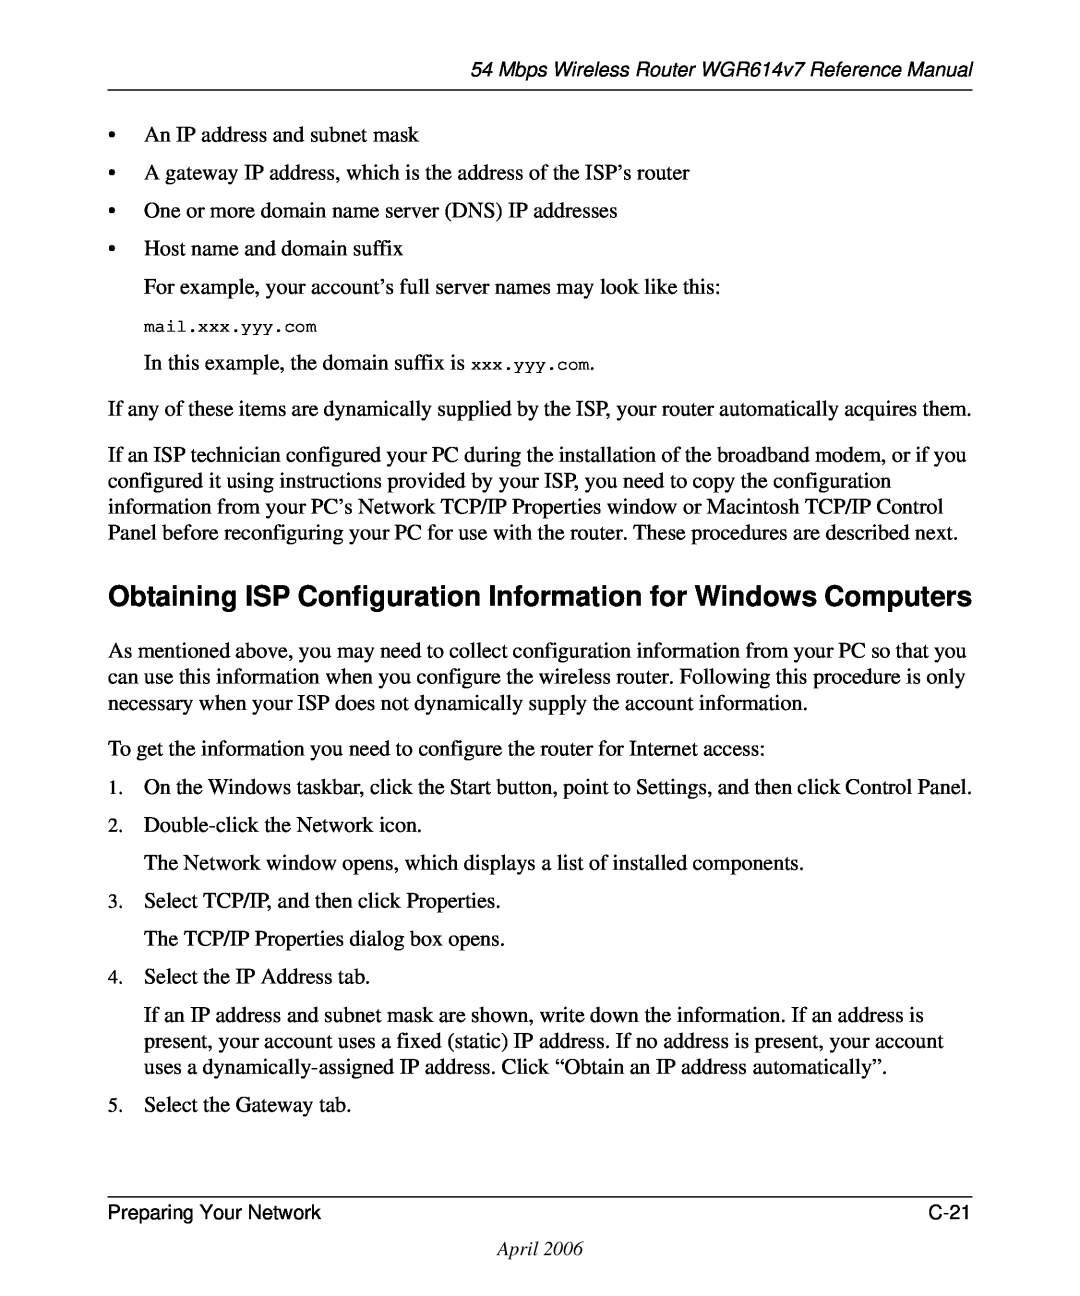 NETGEAR WGR614v7 manual Obtaining ISP Configuration Information for Windows Computers, mail.xxx.yyy.com 